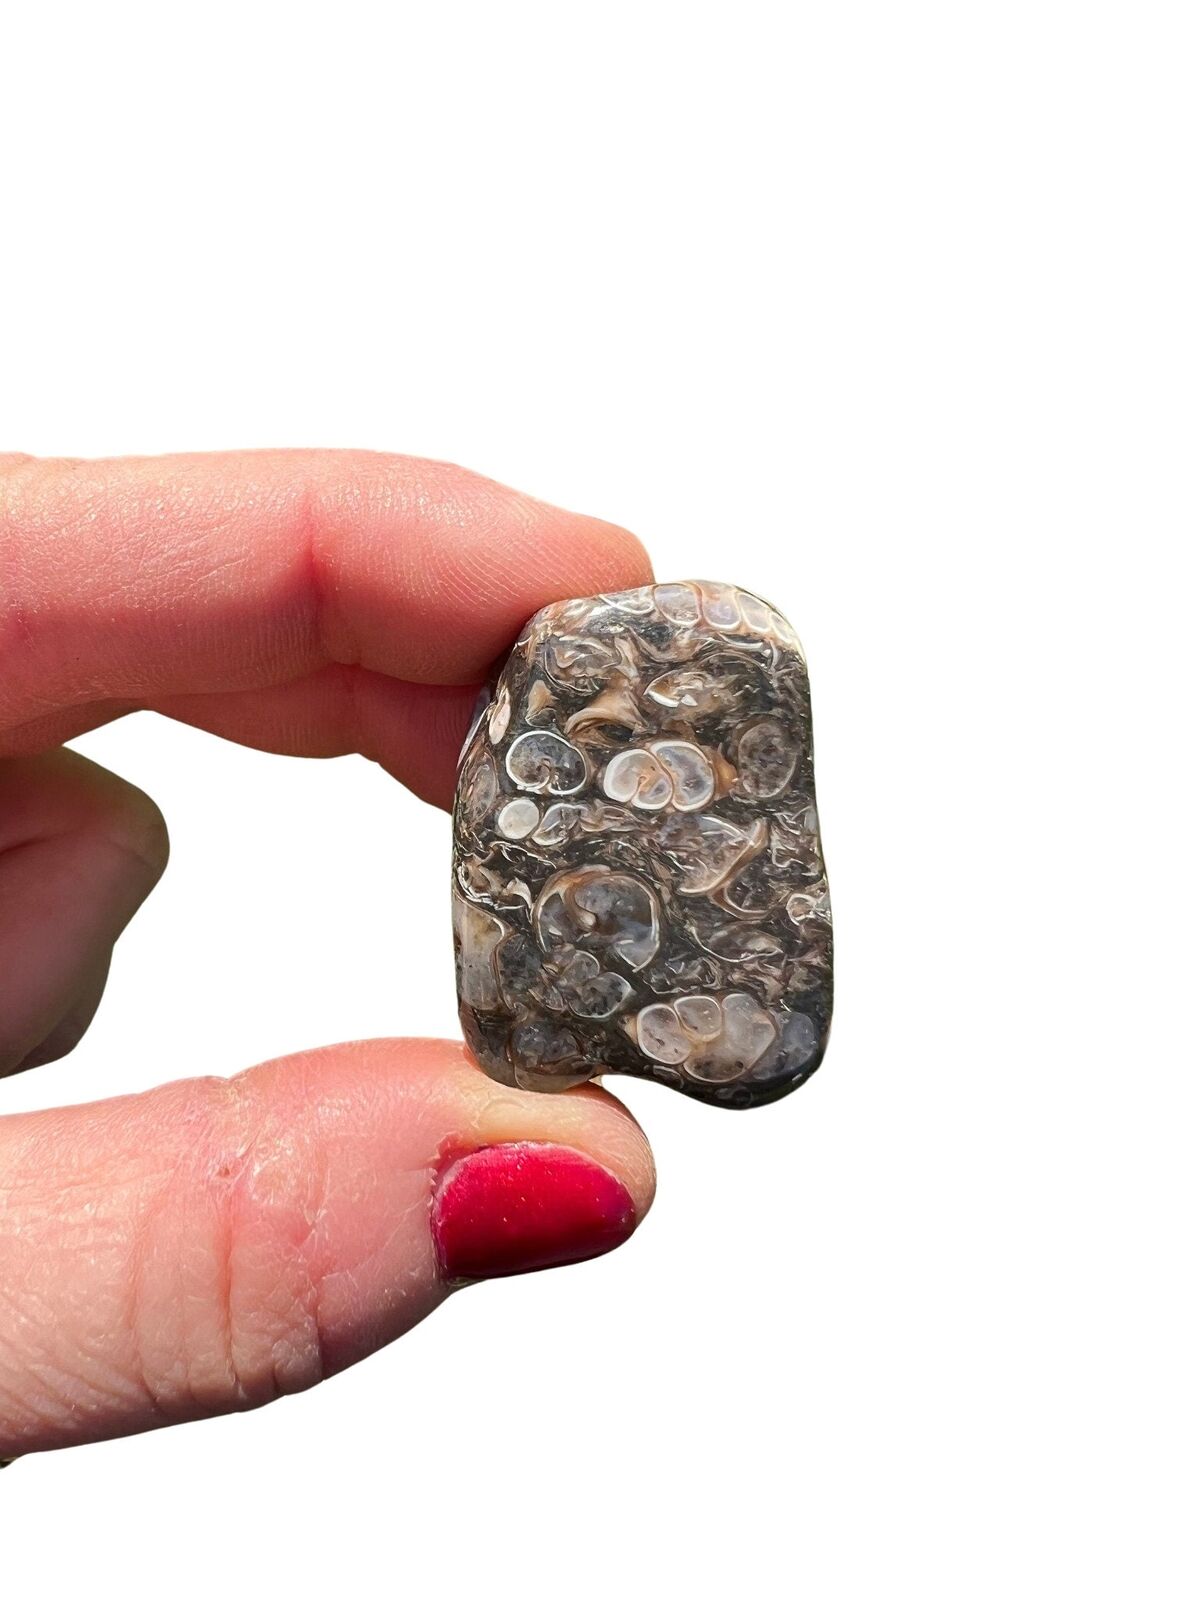 Turritella Agate Tumbled Stone, Natural Turritella Agate from Wyoming, USA